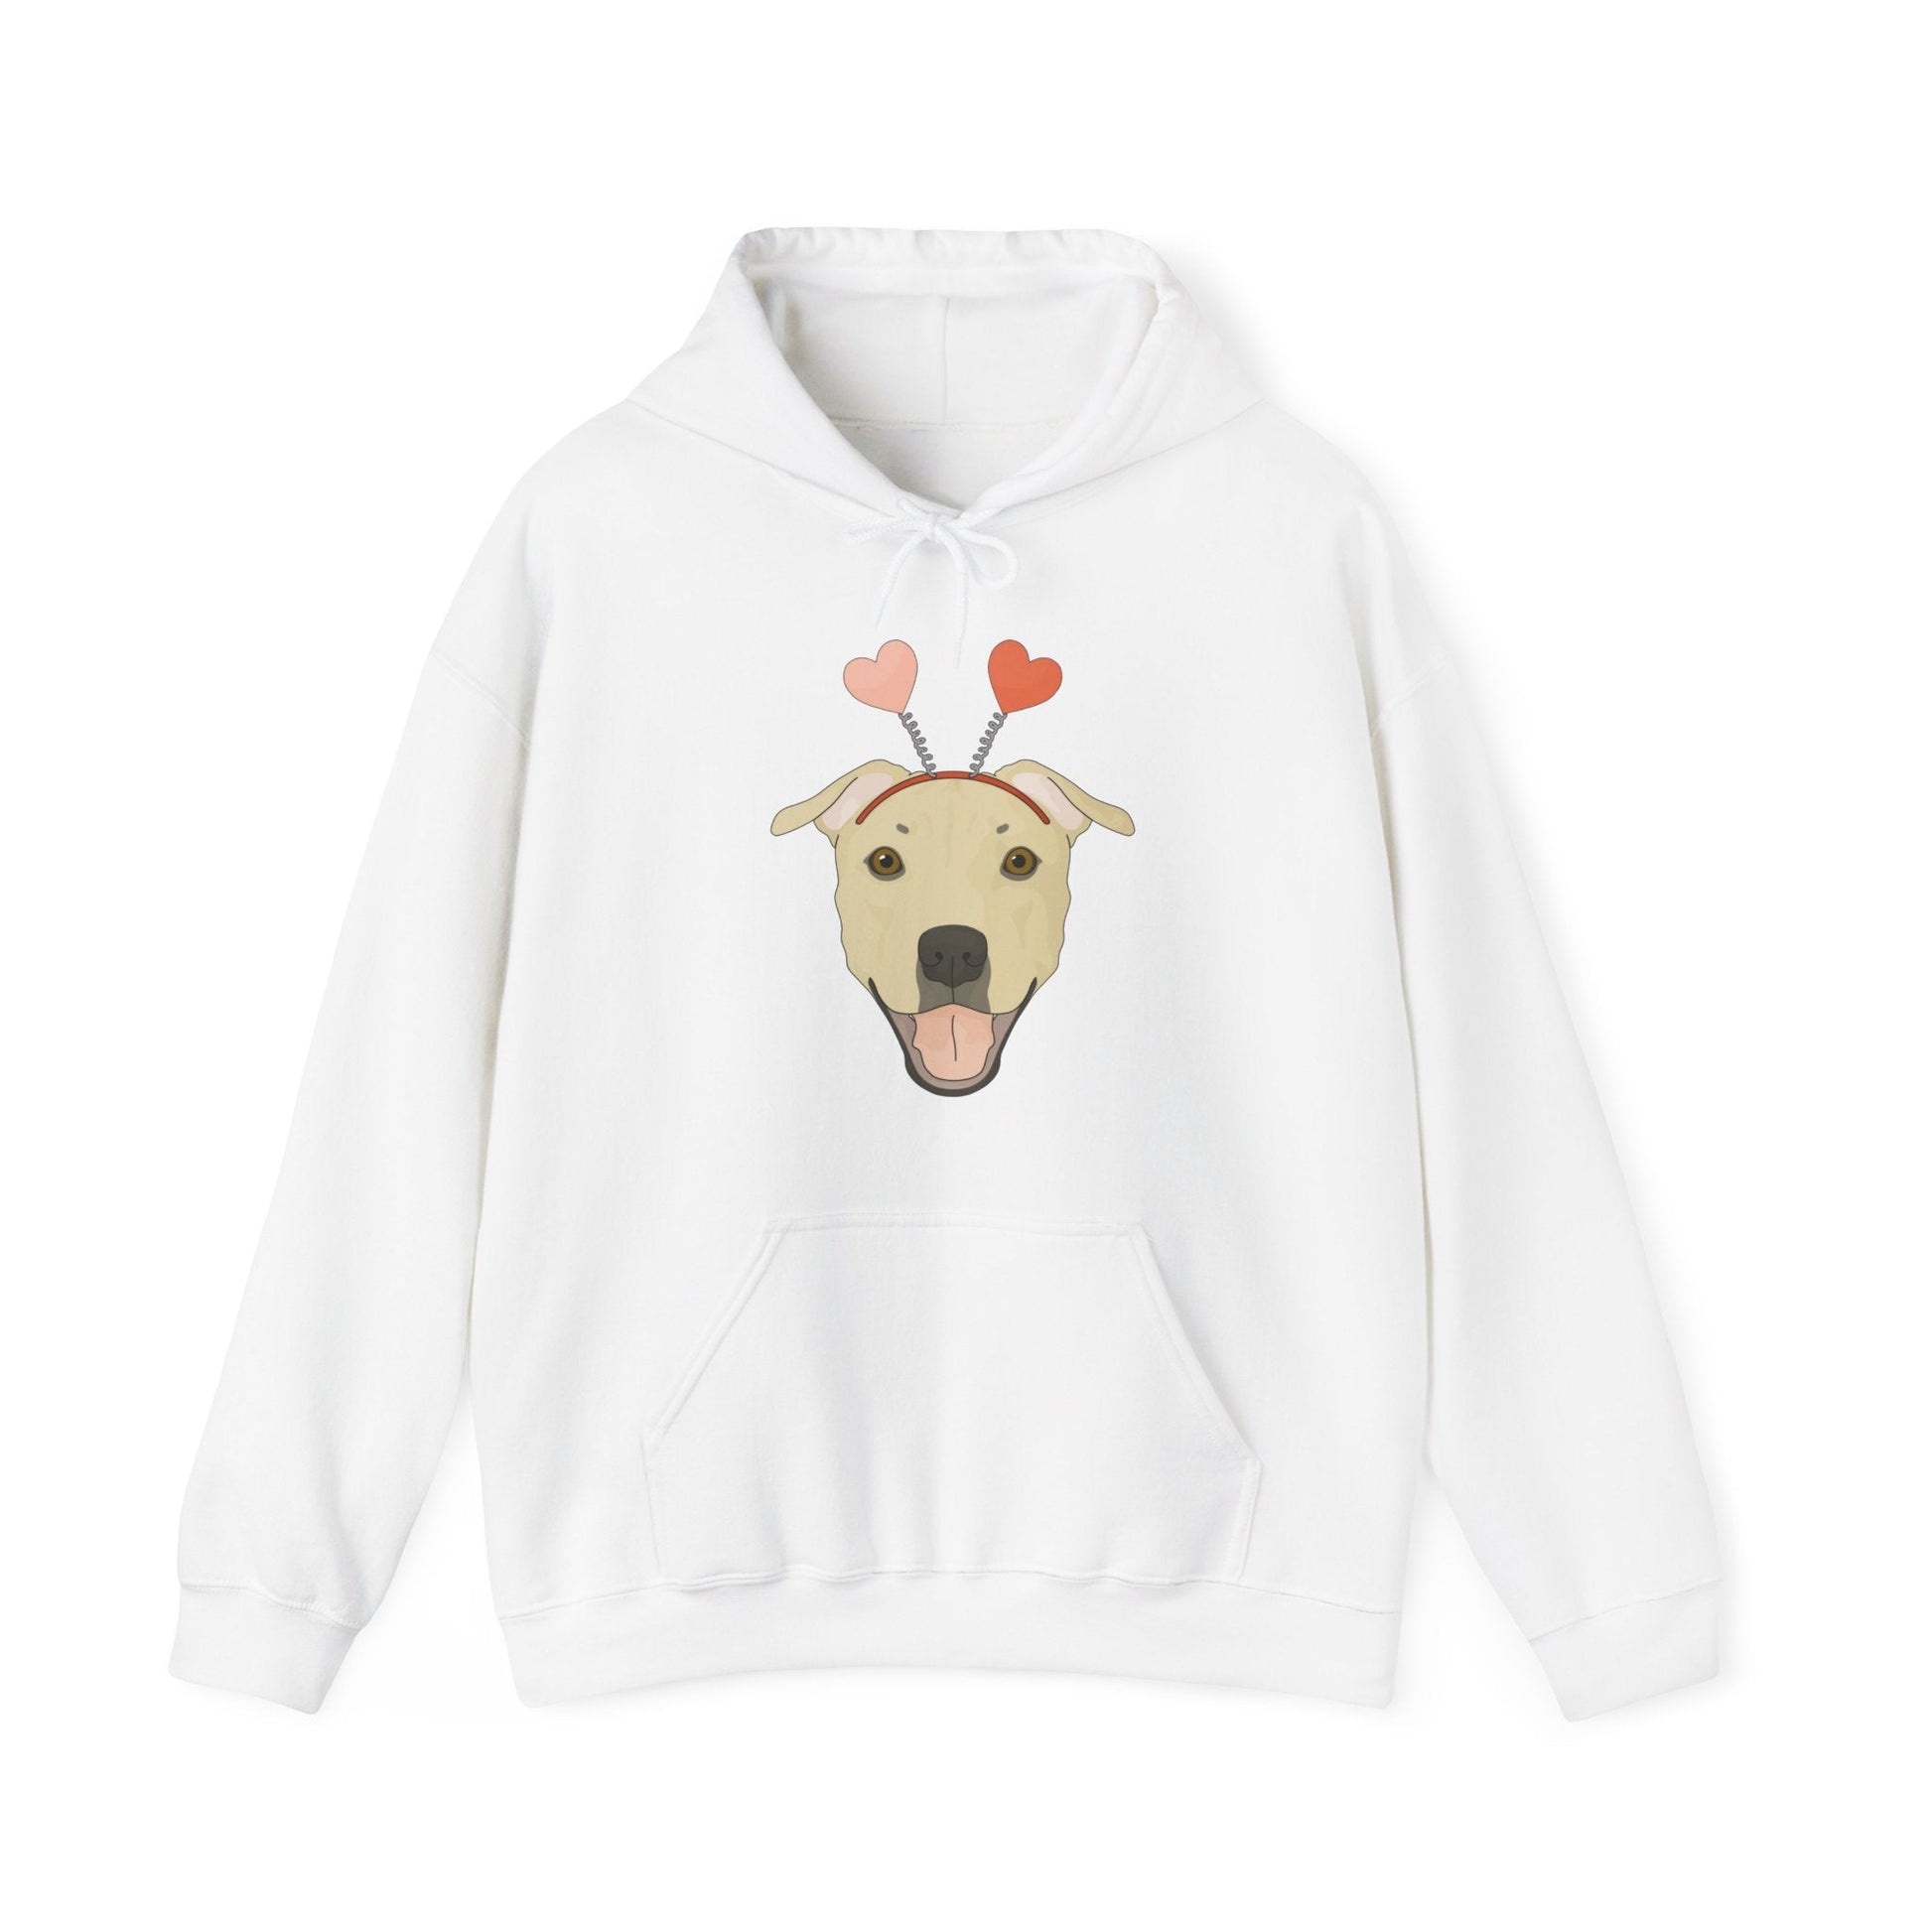 A Very Bully Valentine | Hooded Sweatshirt - Detezi Designs-28183216980154186727